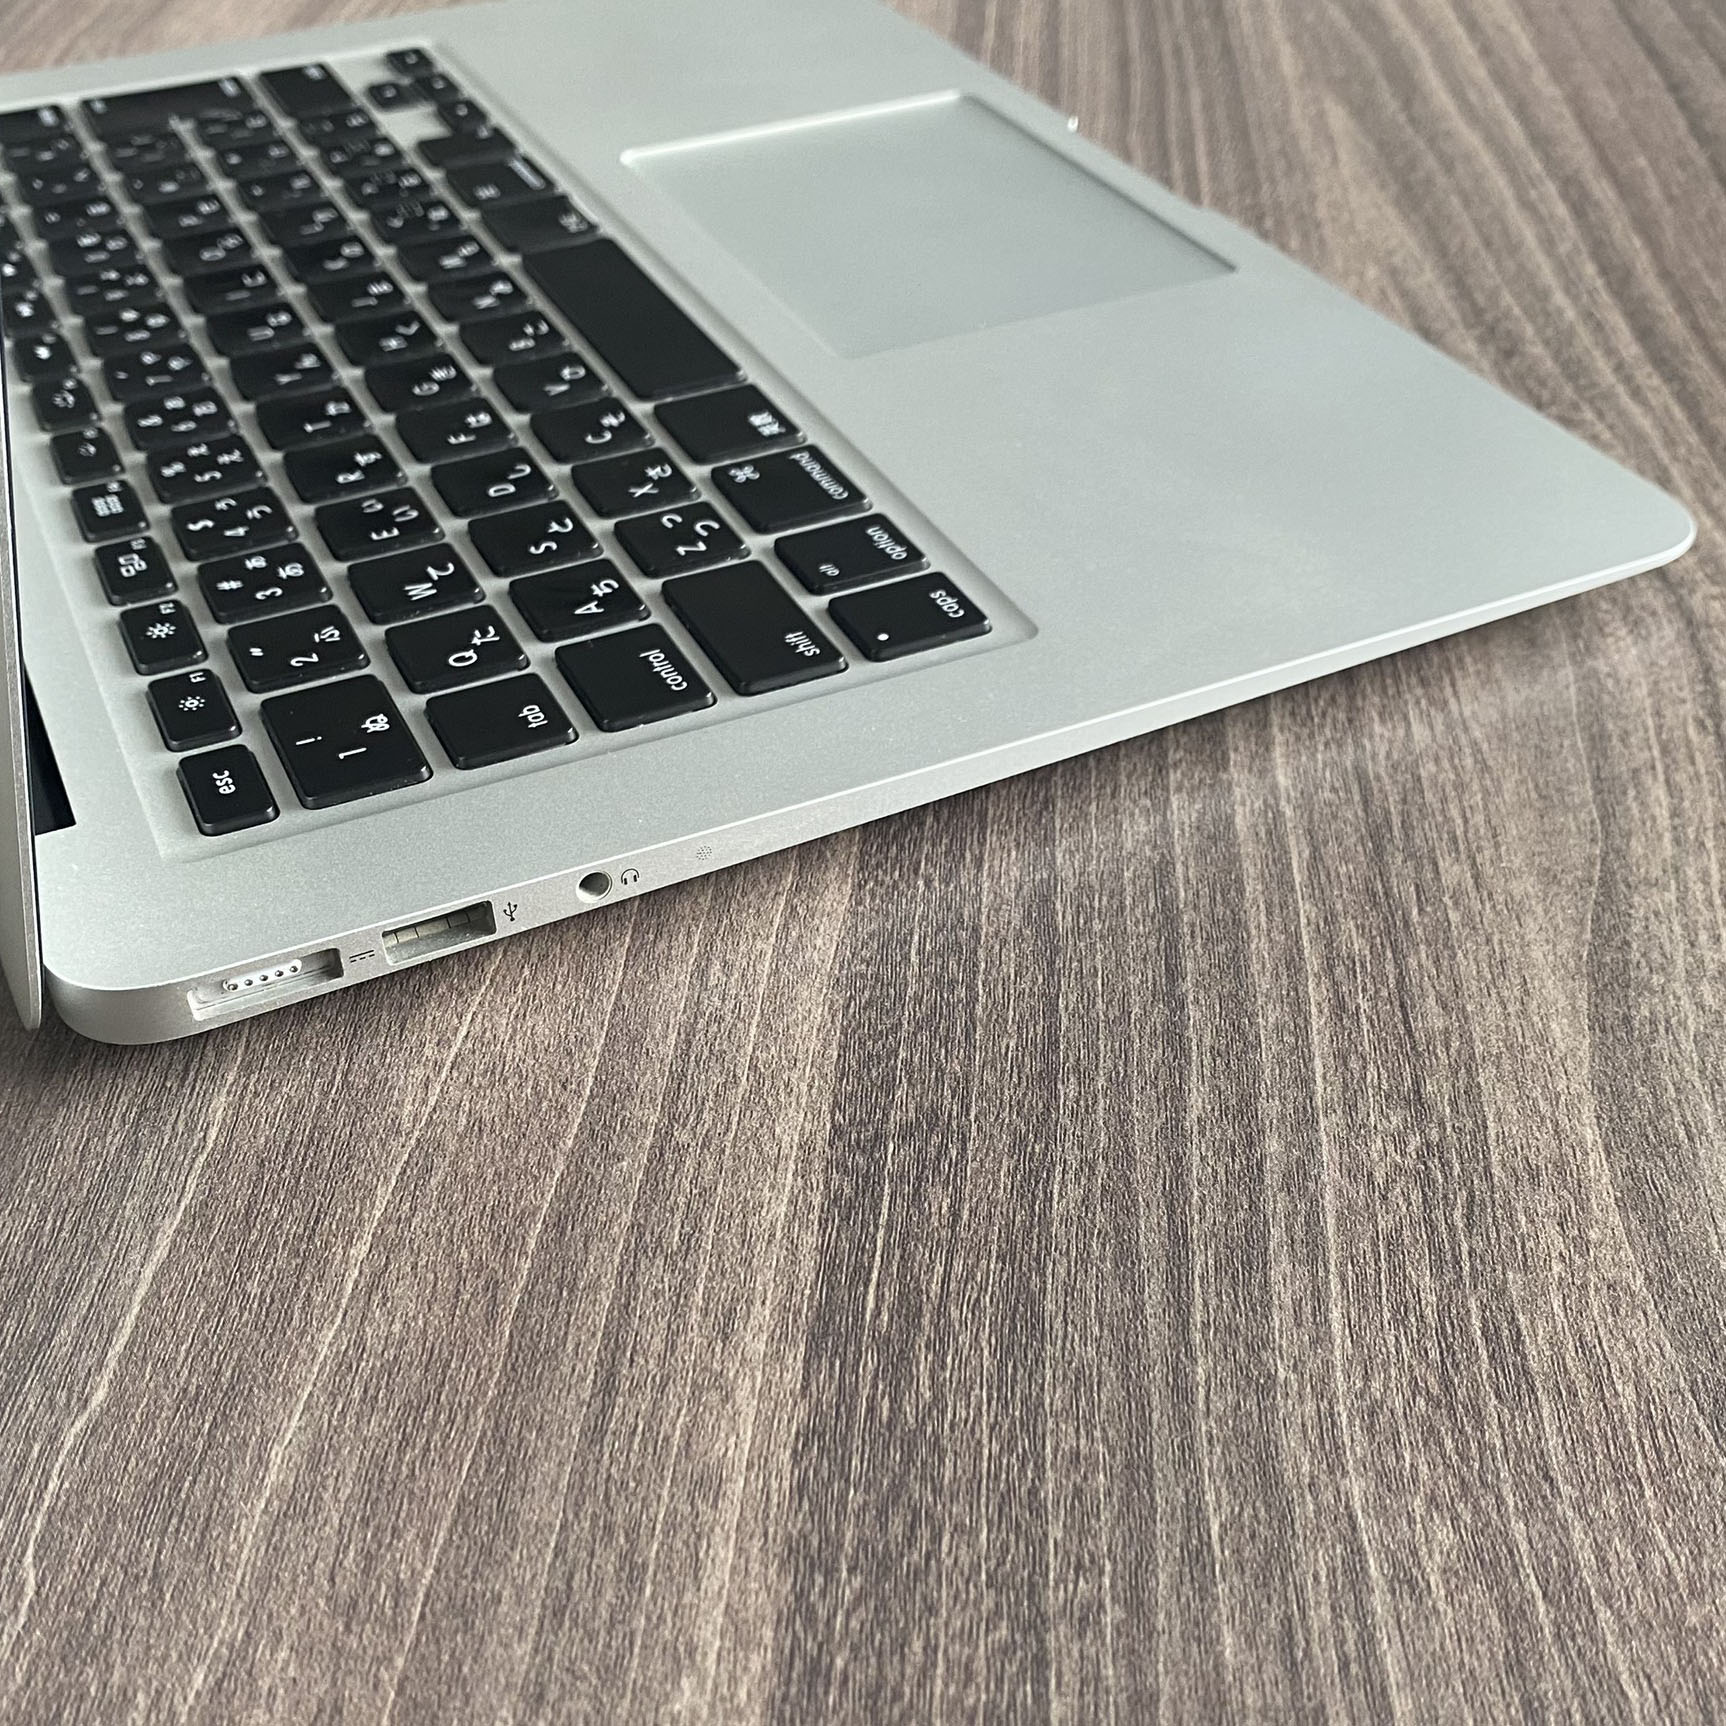 MacBook Air (13-inch, MID 2012) Core i5